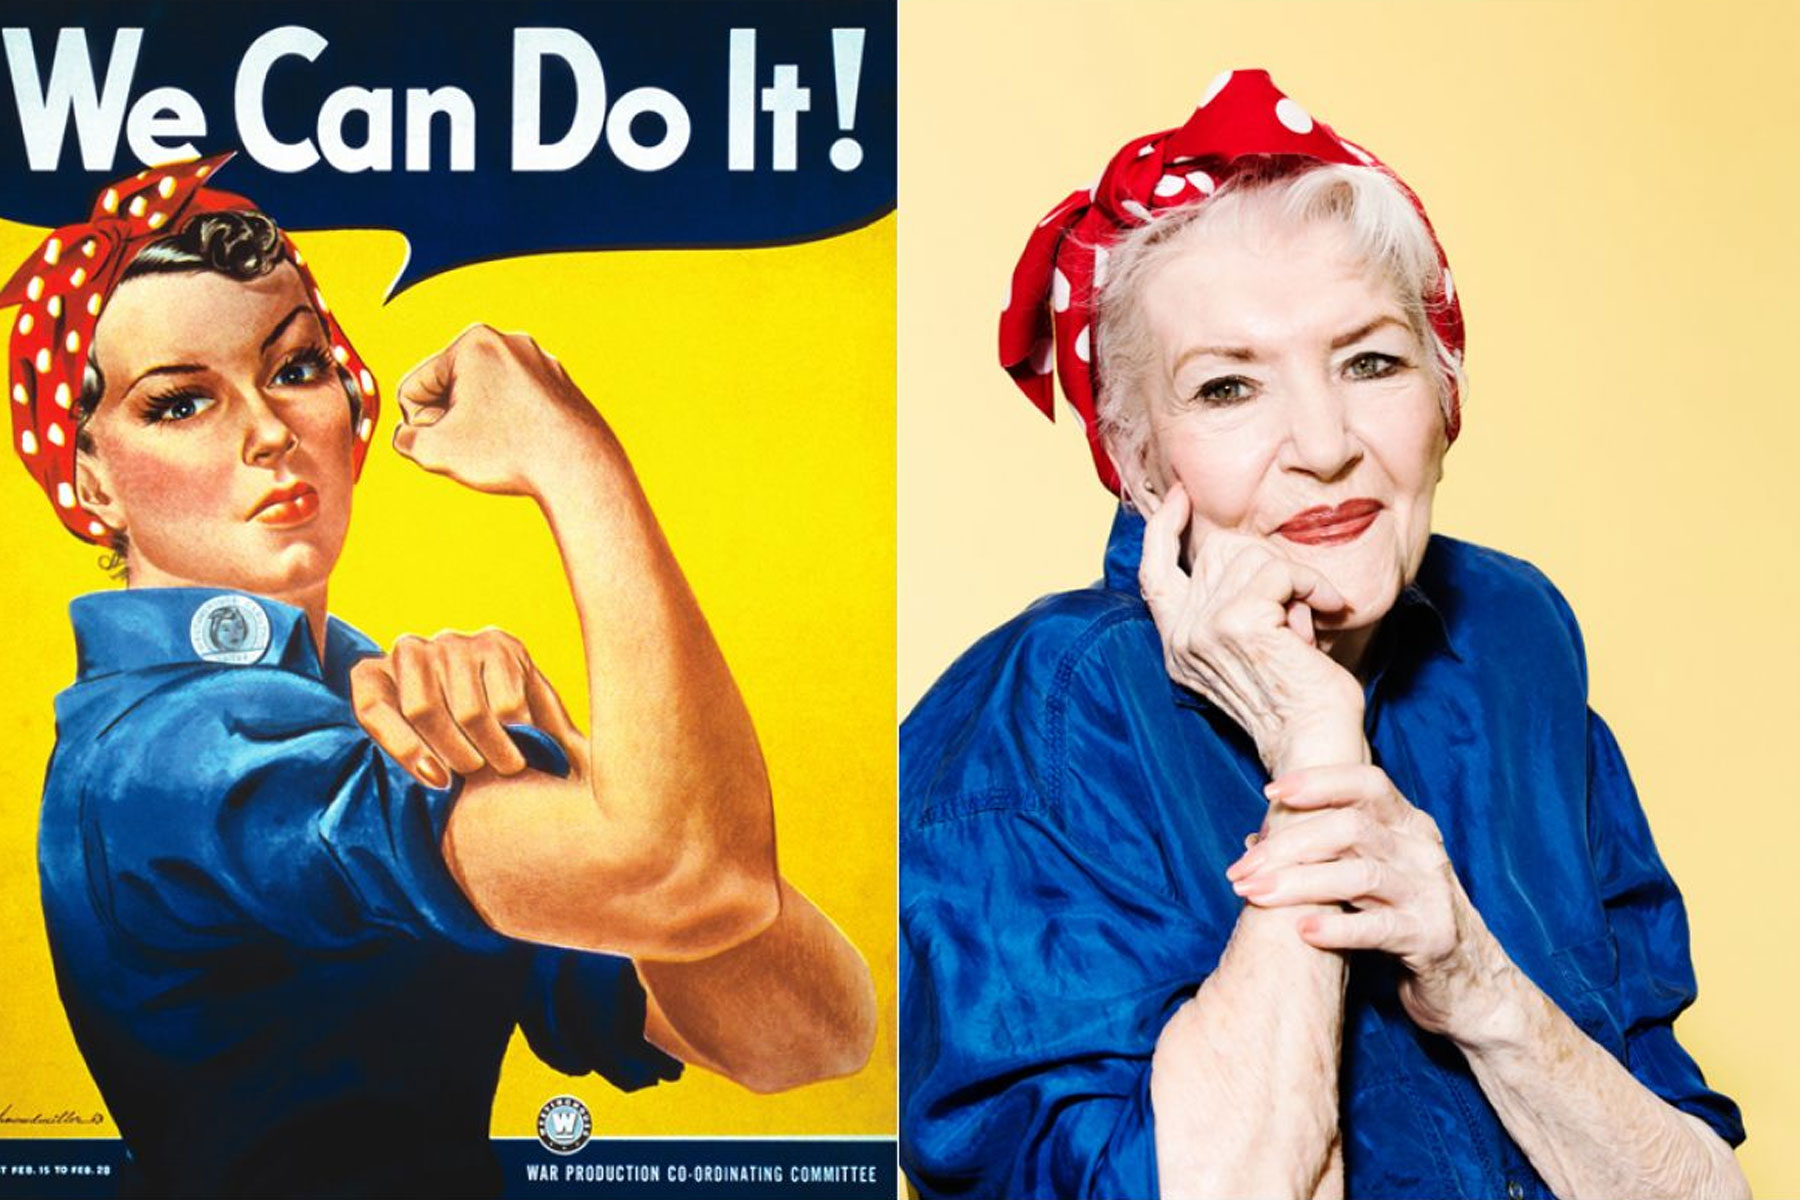 We can do a lot. Рози Клепальщица Рокуэлл. Клепальщицы Рози (Rosie the Riveter). Клепальщица Рози плакат.